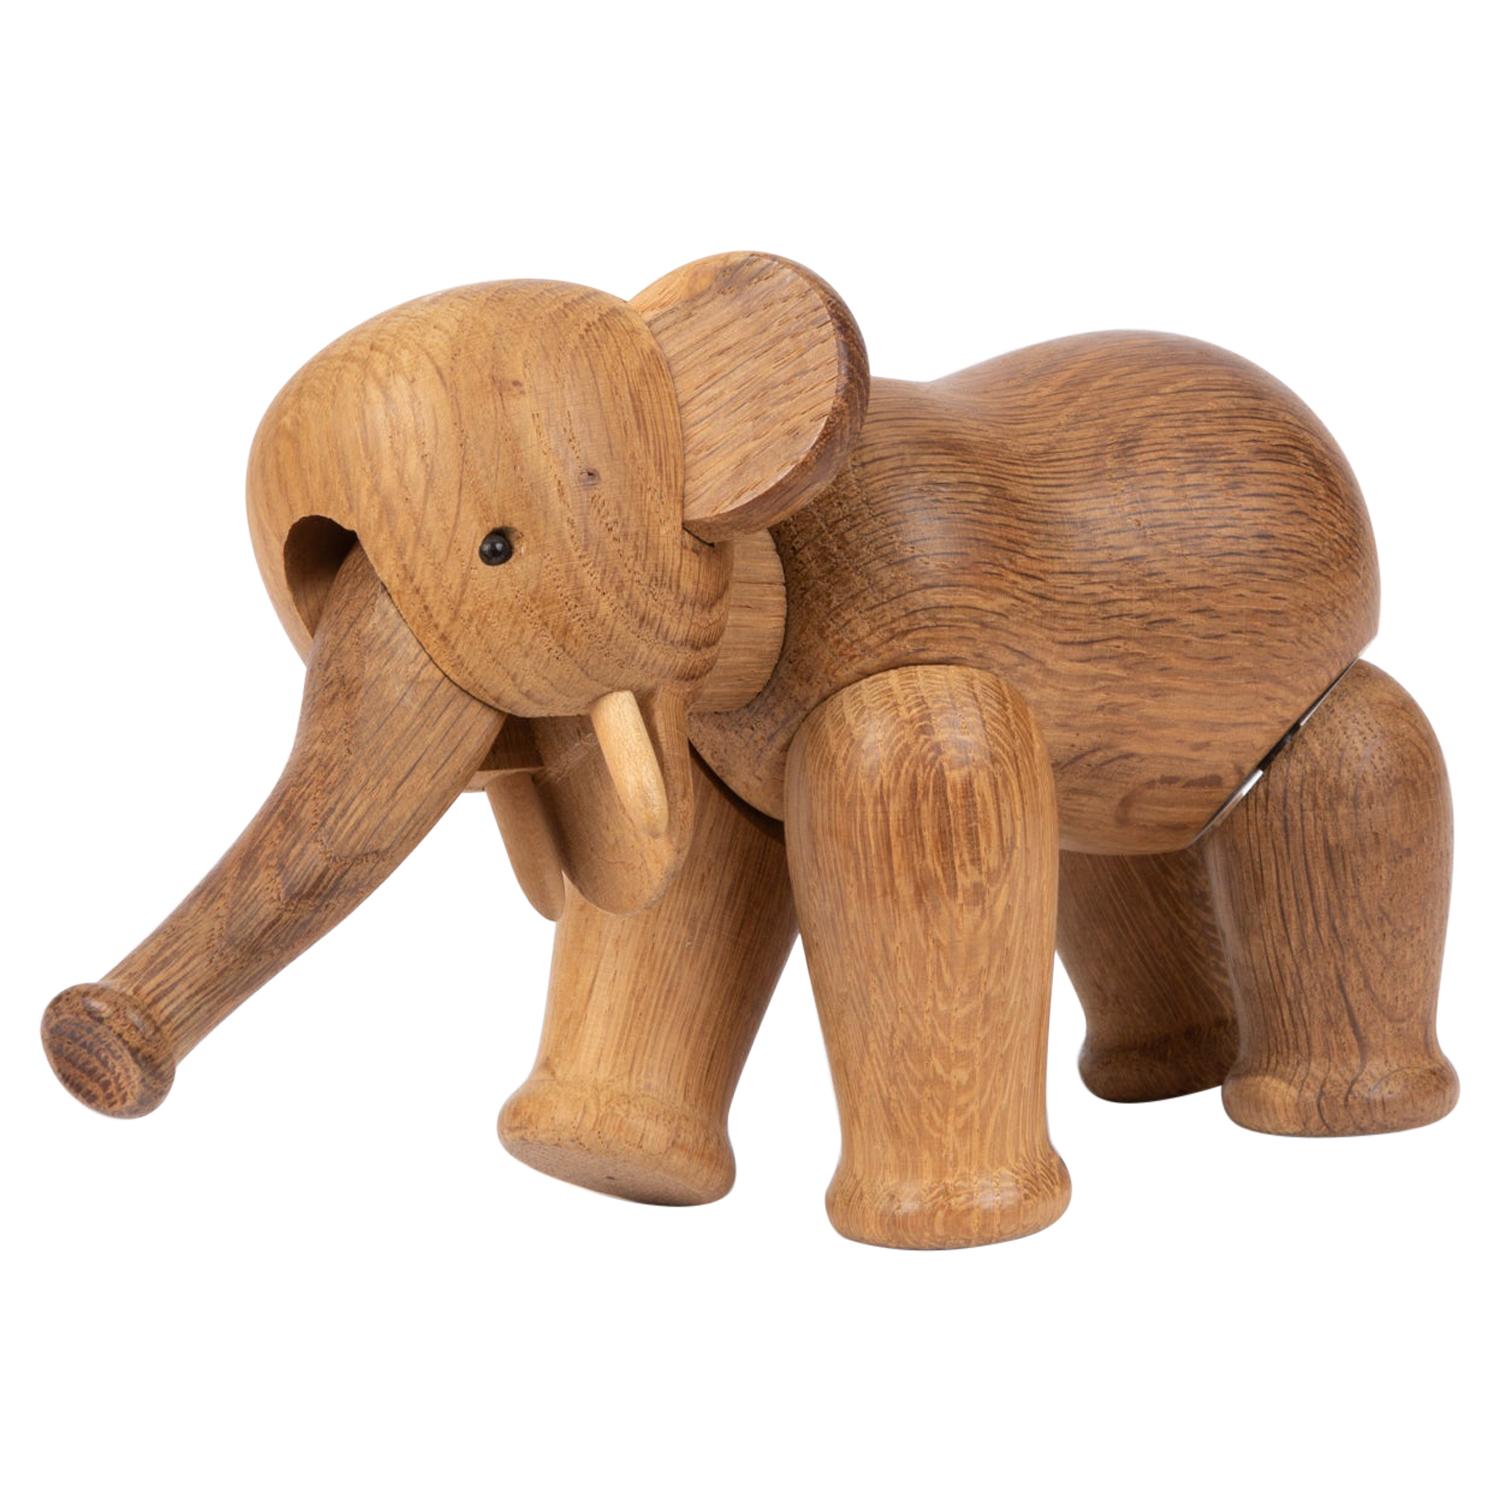 Kay Bojesen Wooden Elephant Figurine